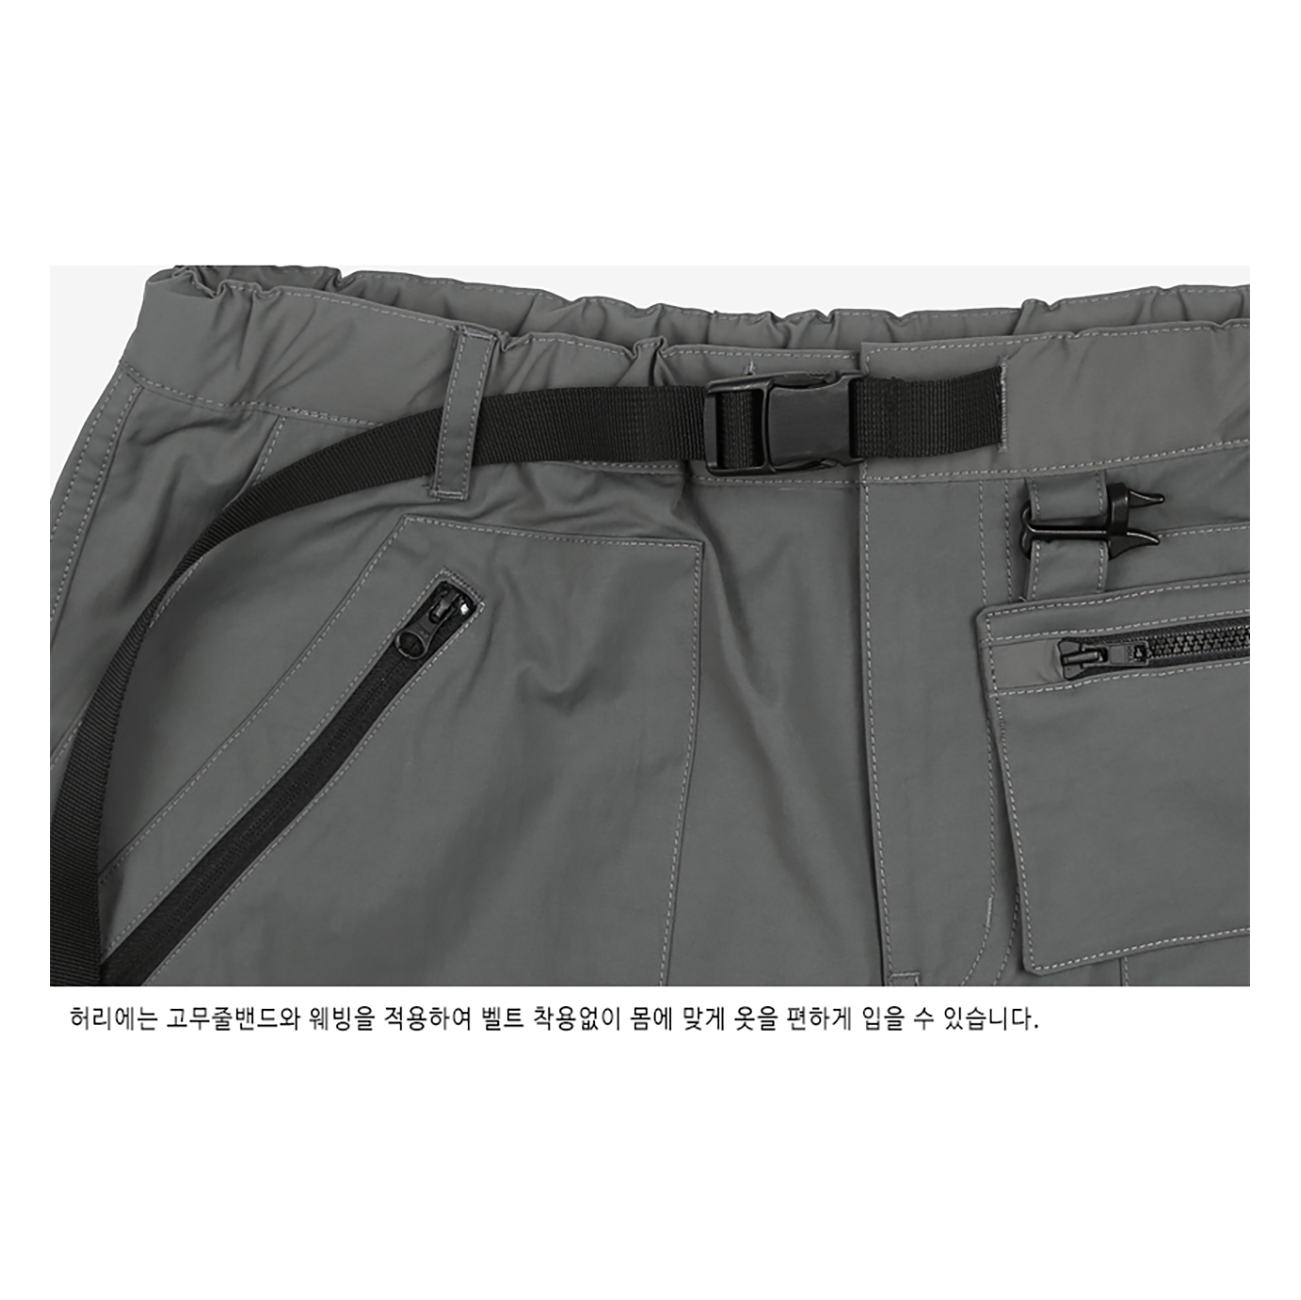 CAYL Mountain pants2- Grey